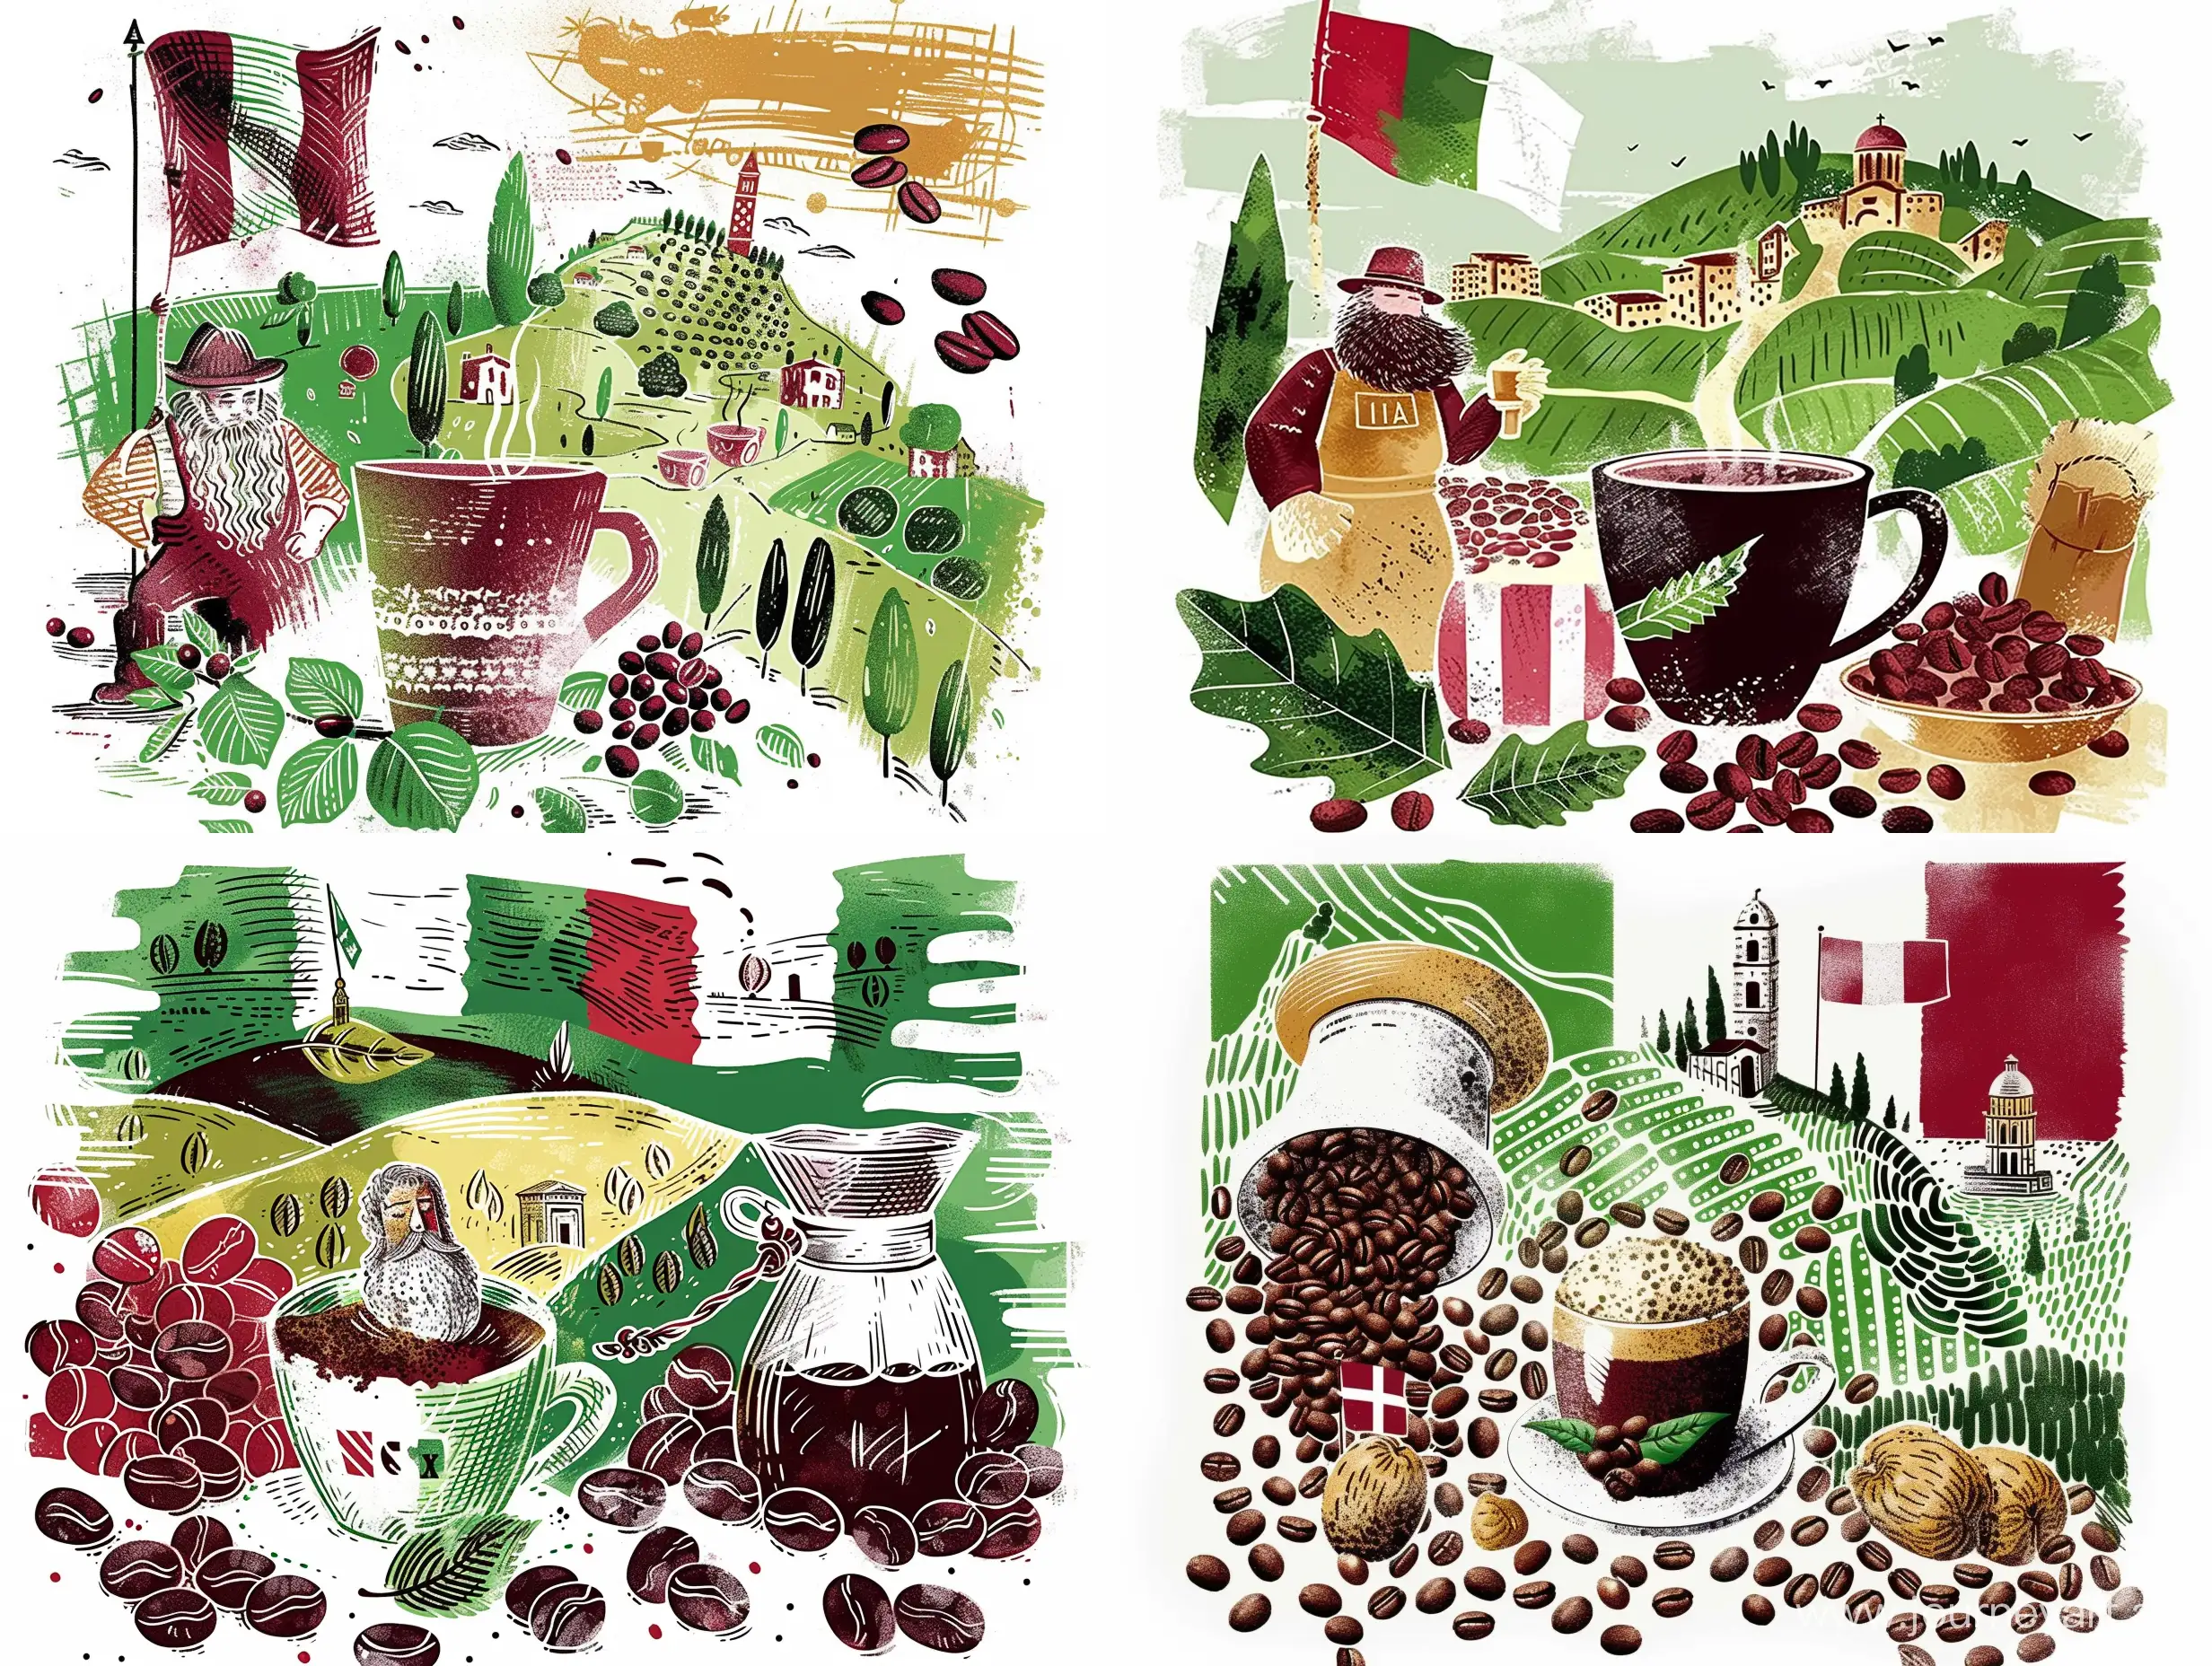 AvantGarde-Illustration-Italian-Flag-and-Coffee-Beans-Amidst-Nature